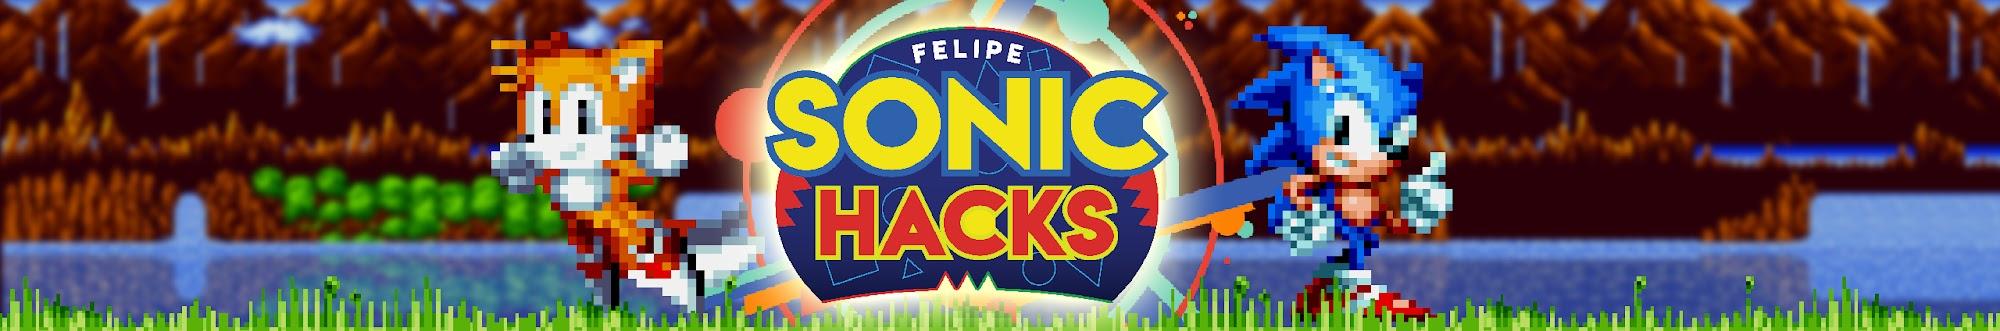 Felipe Sonic Hacks